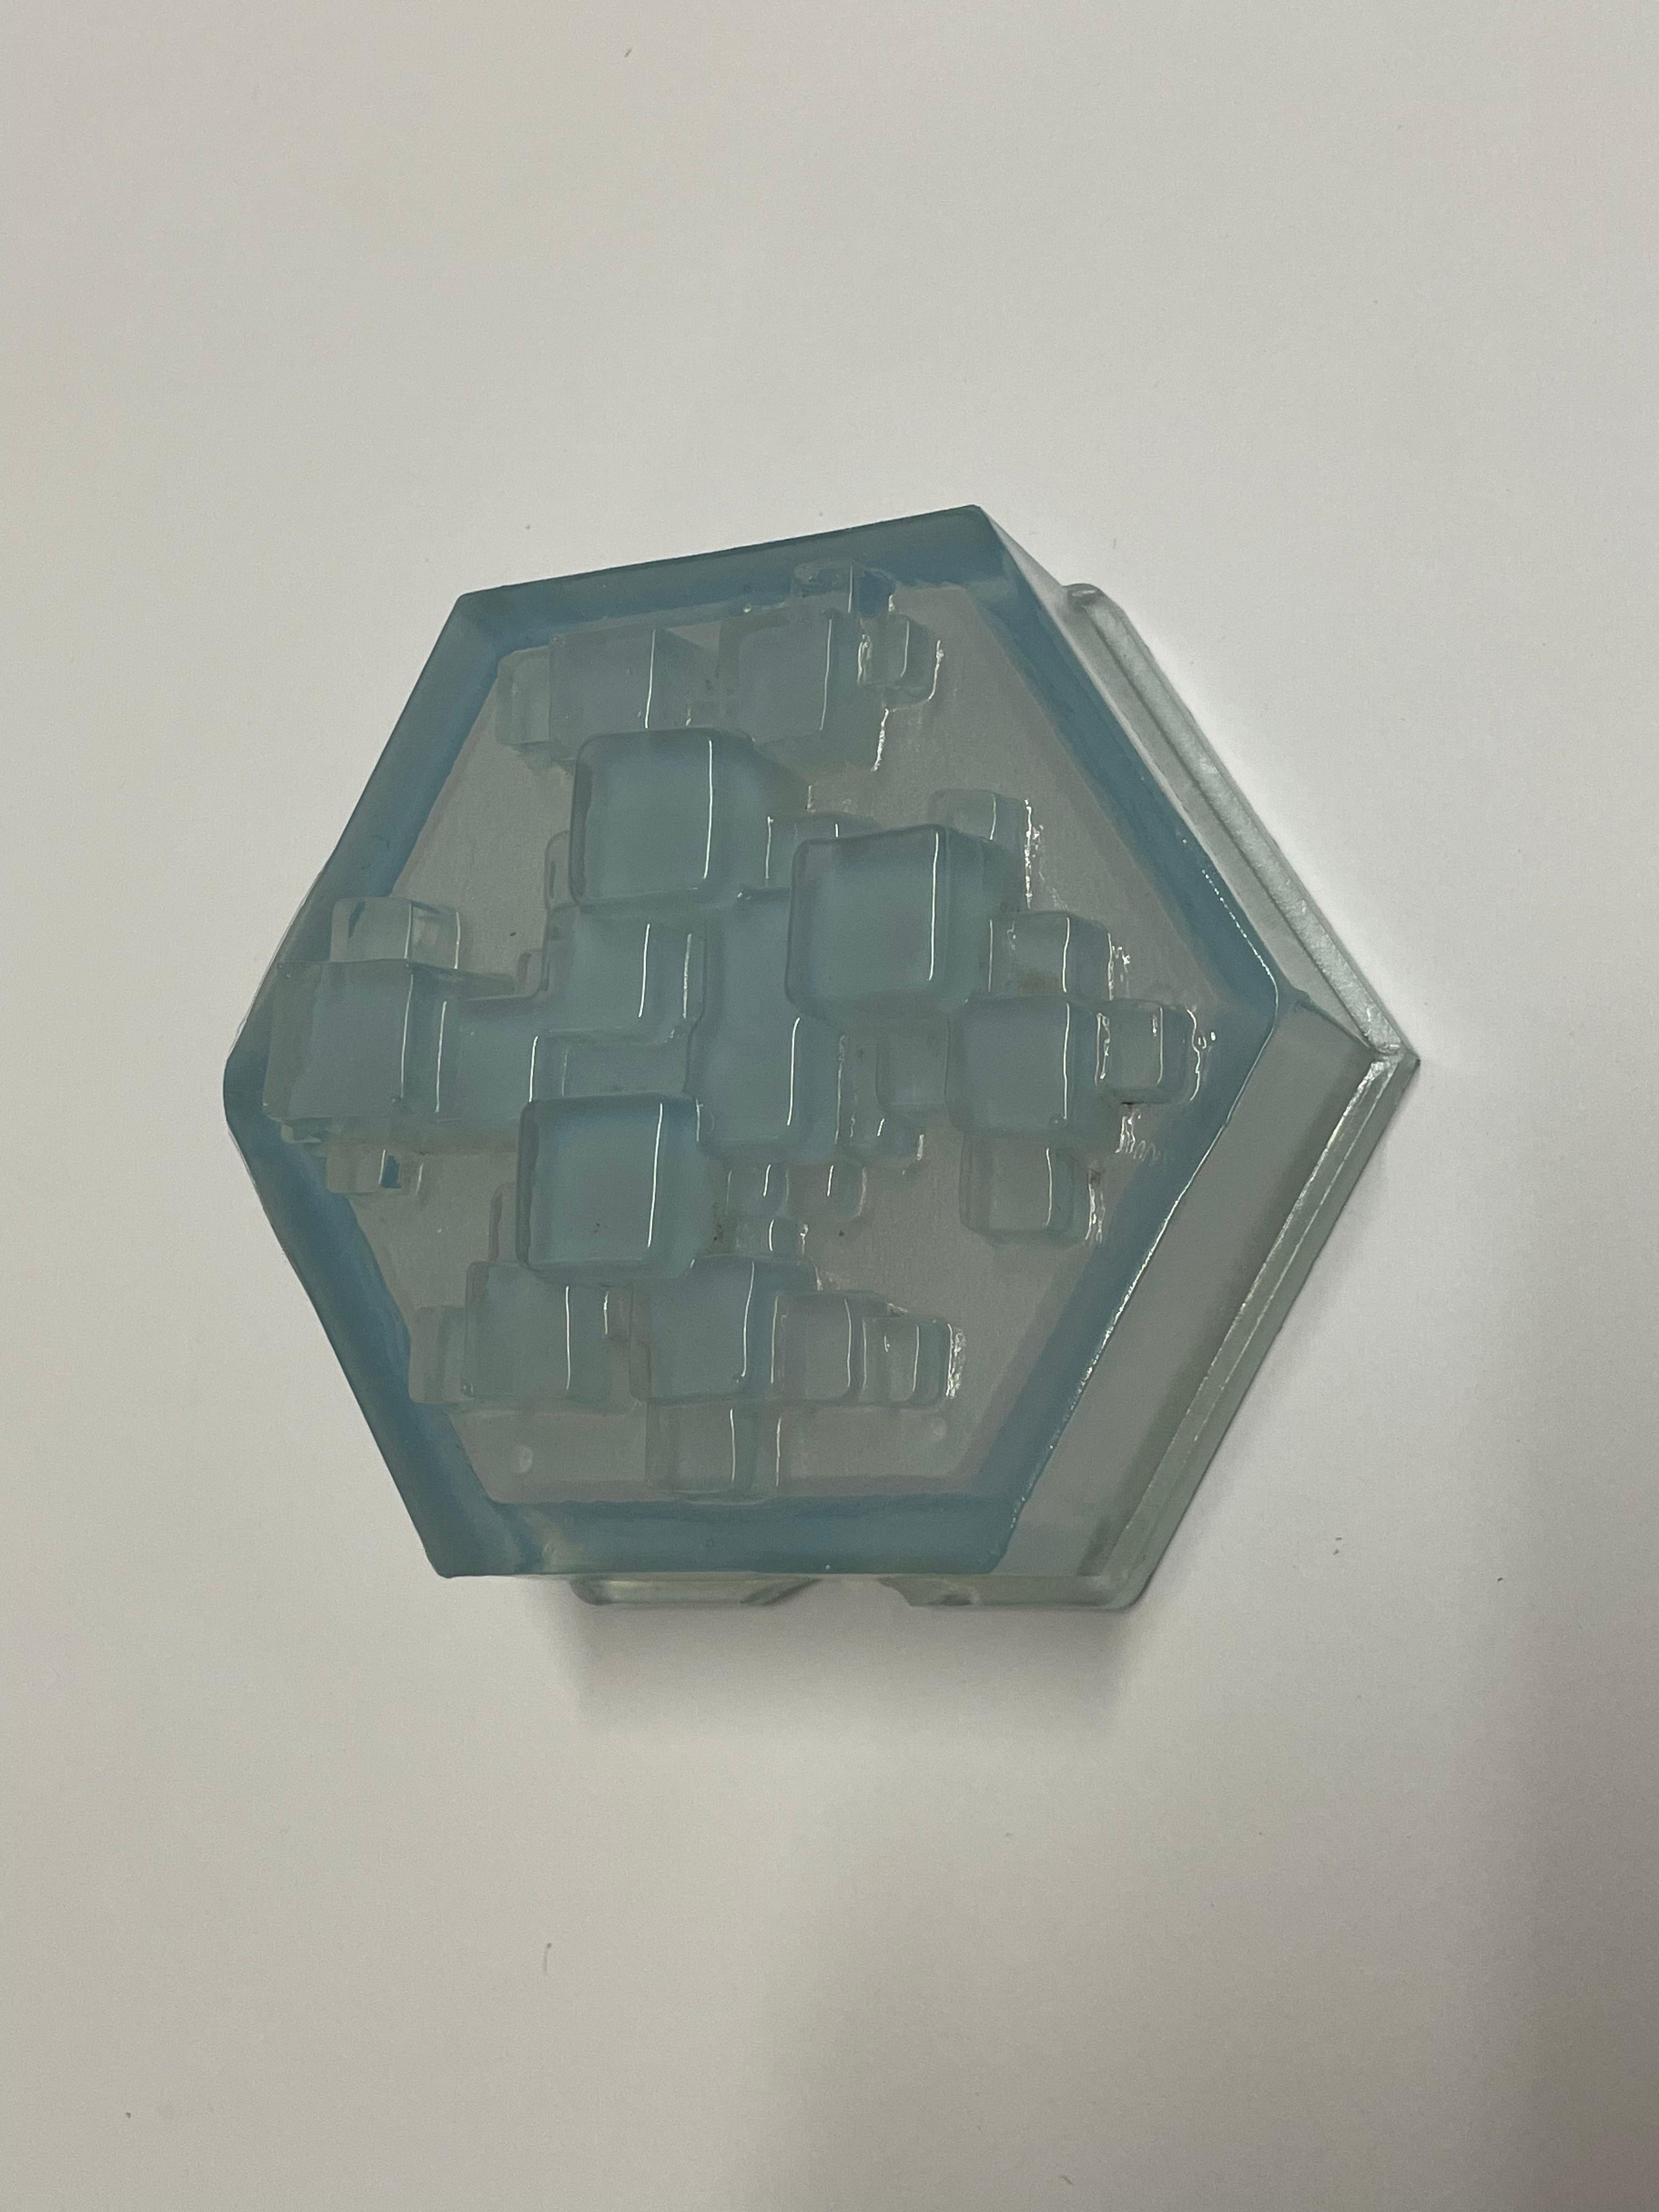 Hexagonal Modular Sconces / Flush Mounts by Poliarte - 3 available For Sale 10